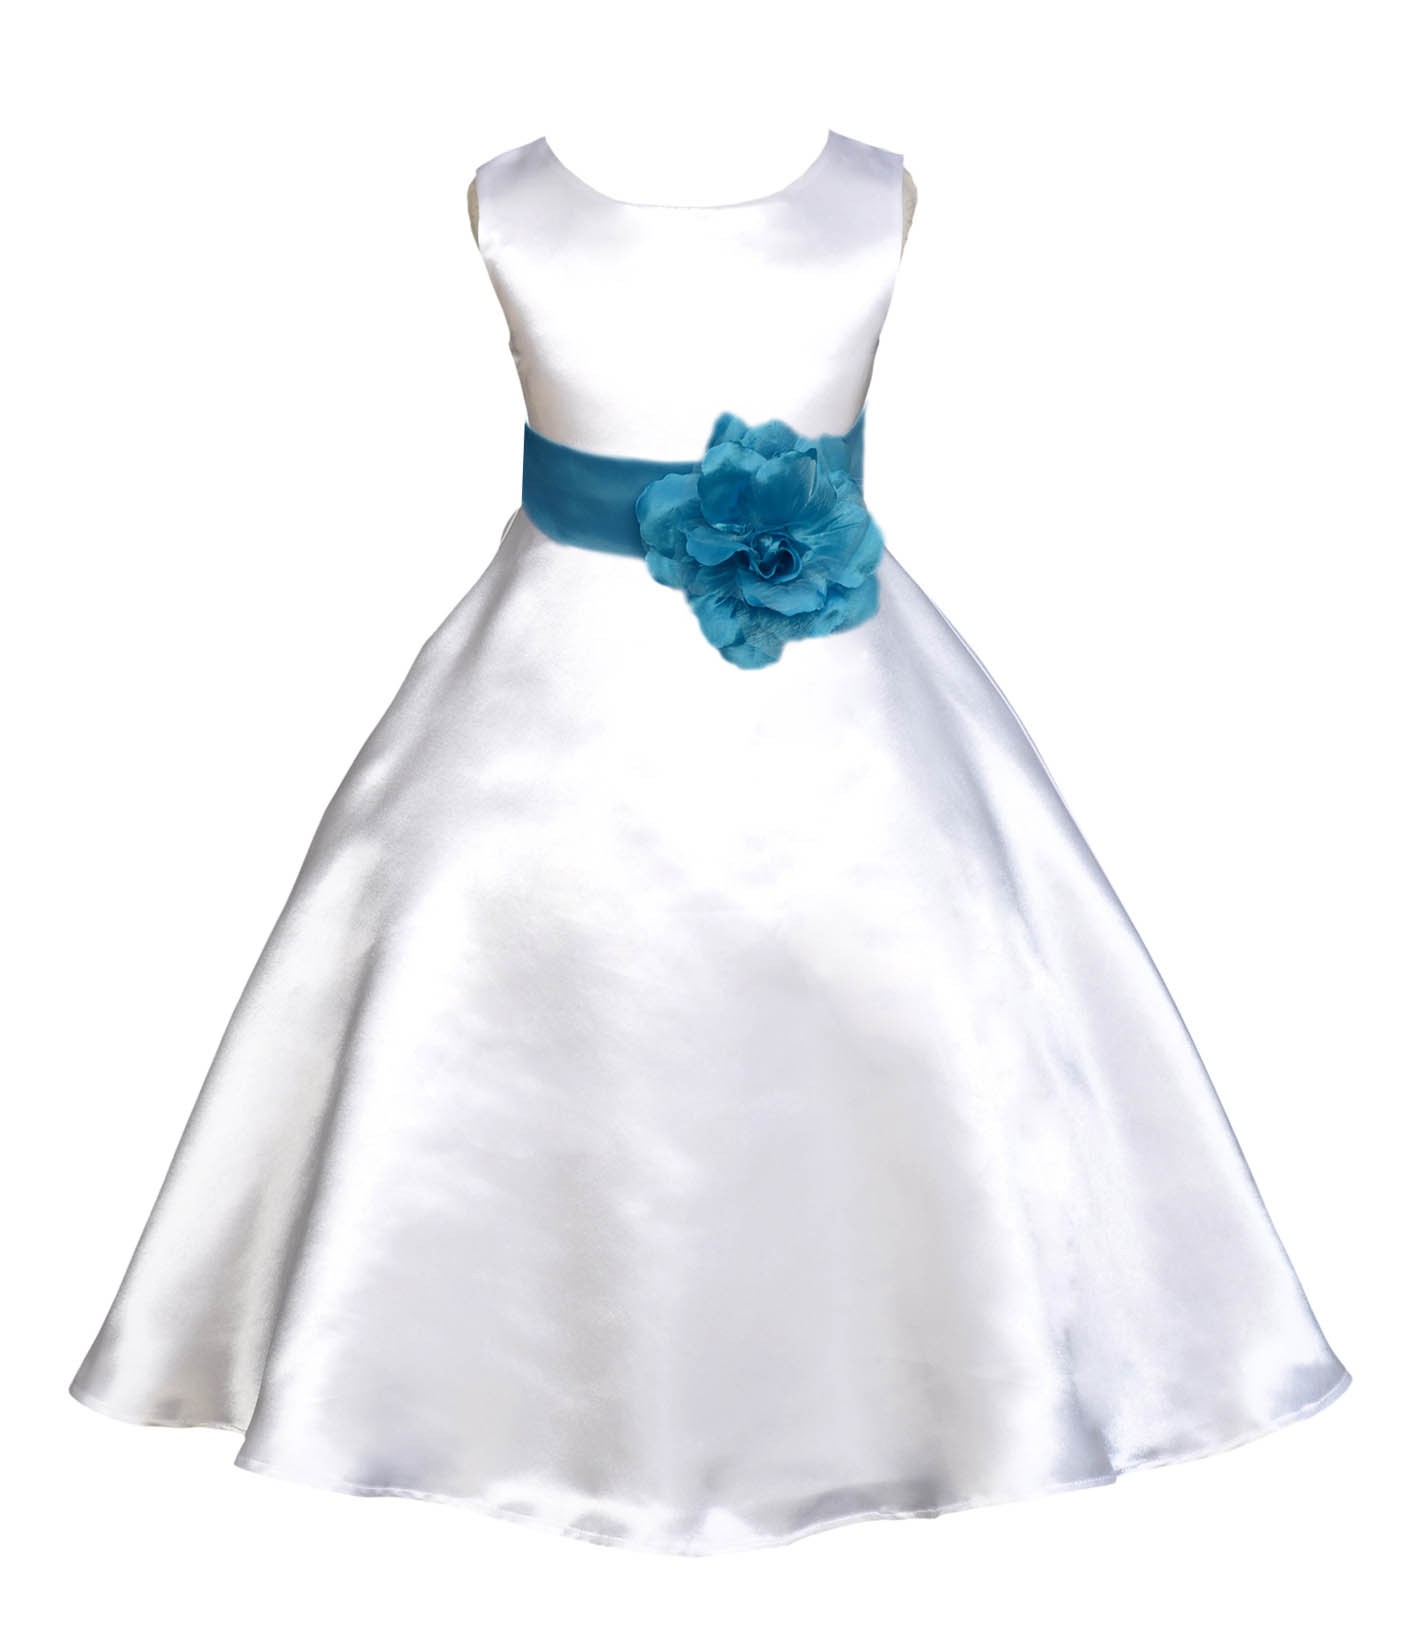 White/Turquoise A-Line Satin Flower Girl Dress Wedding Bridal 821T